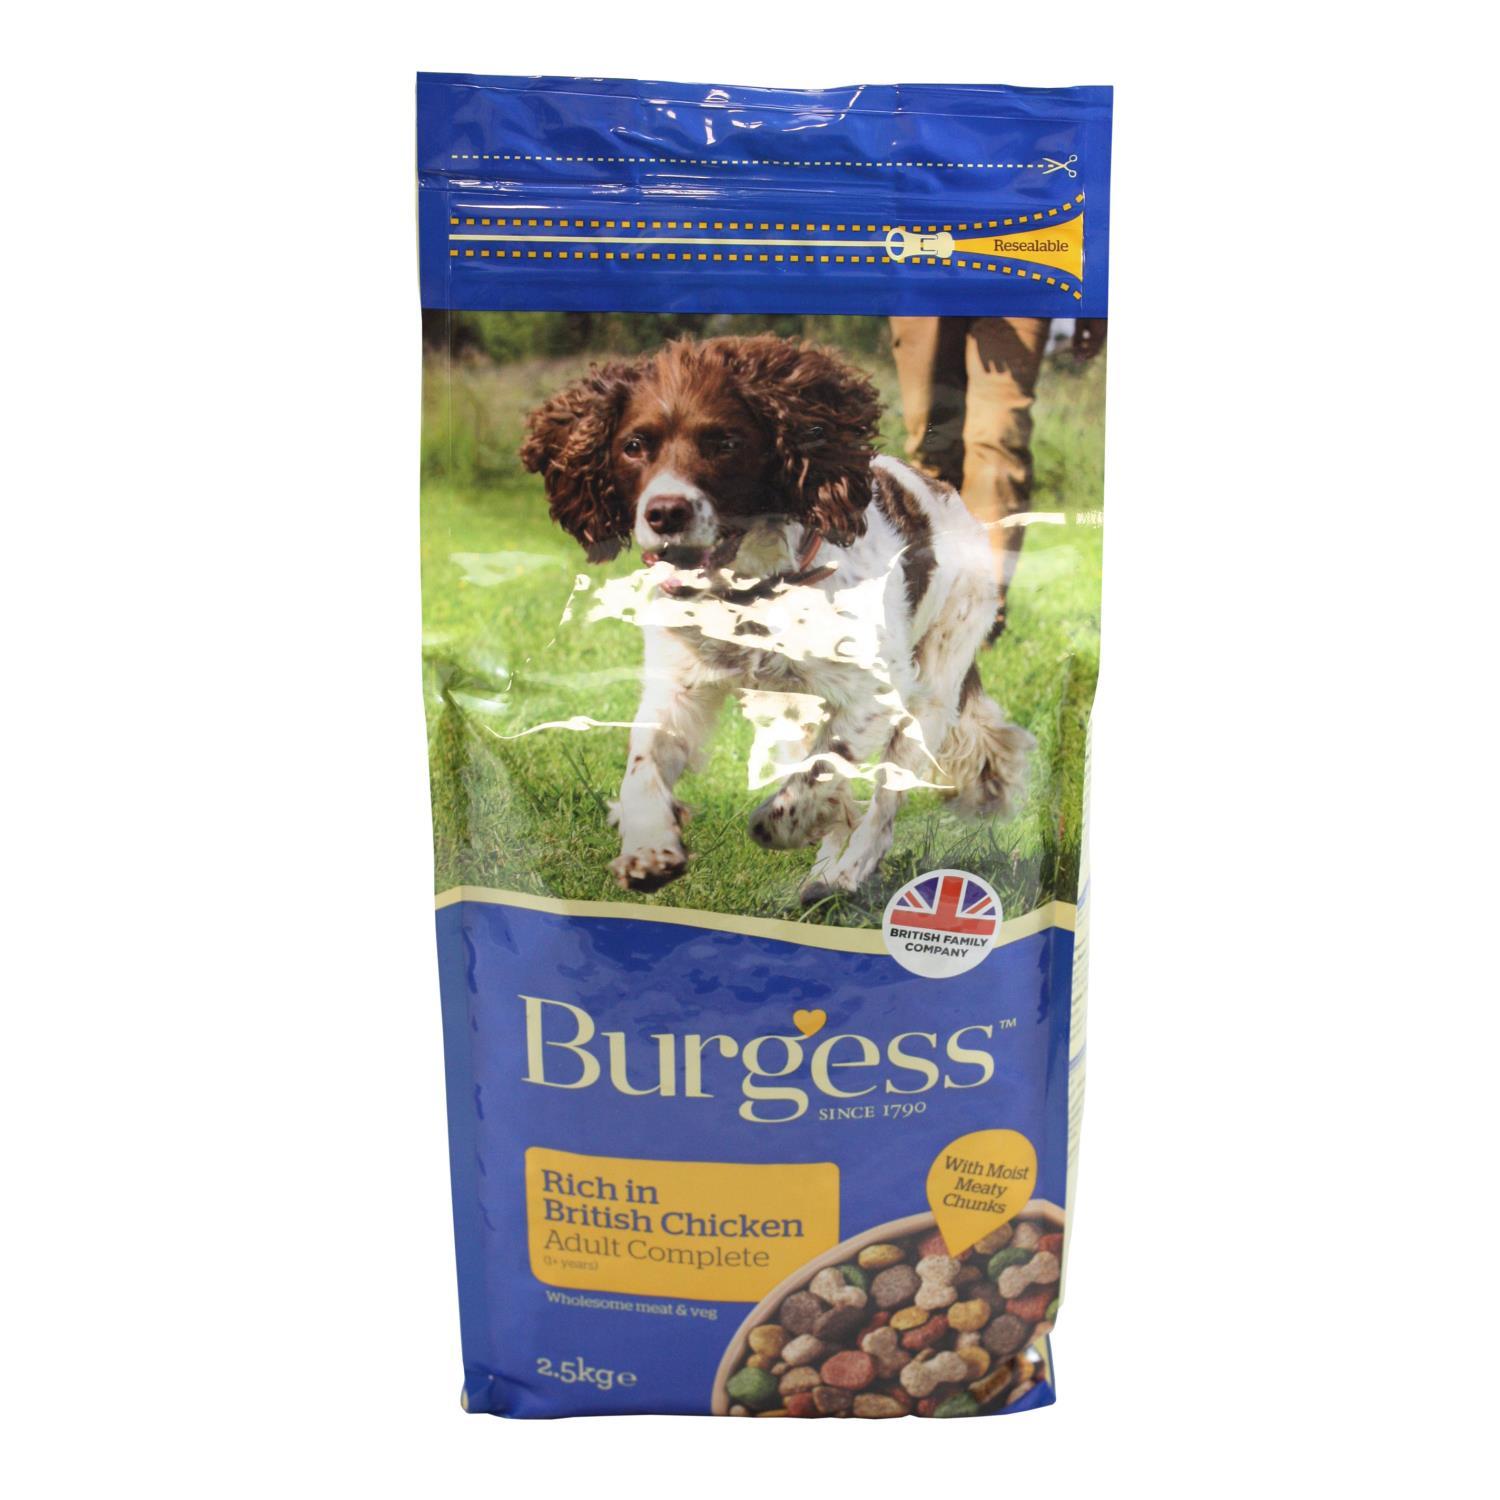 Buy Burgess Adult Complete British Chicken Dry Dog Food 2